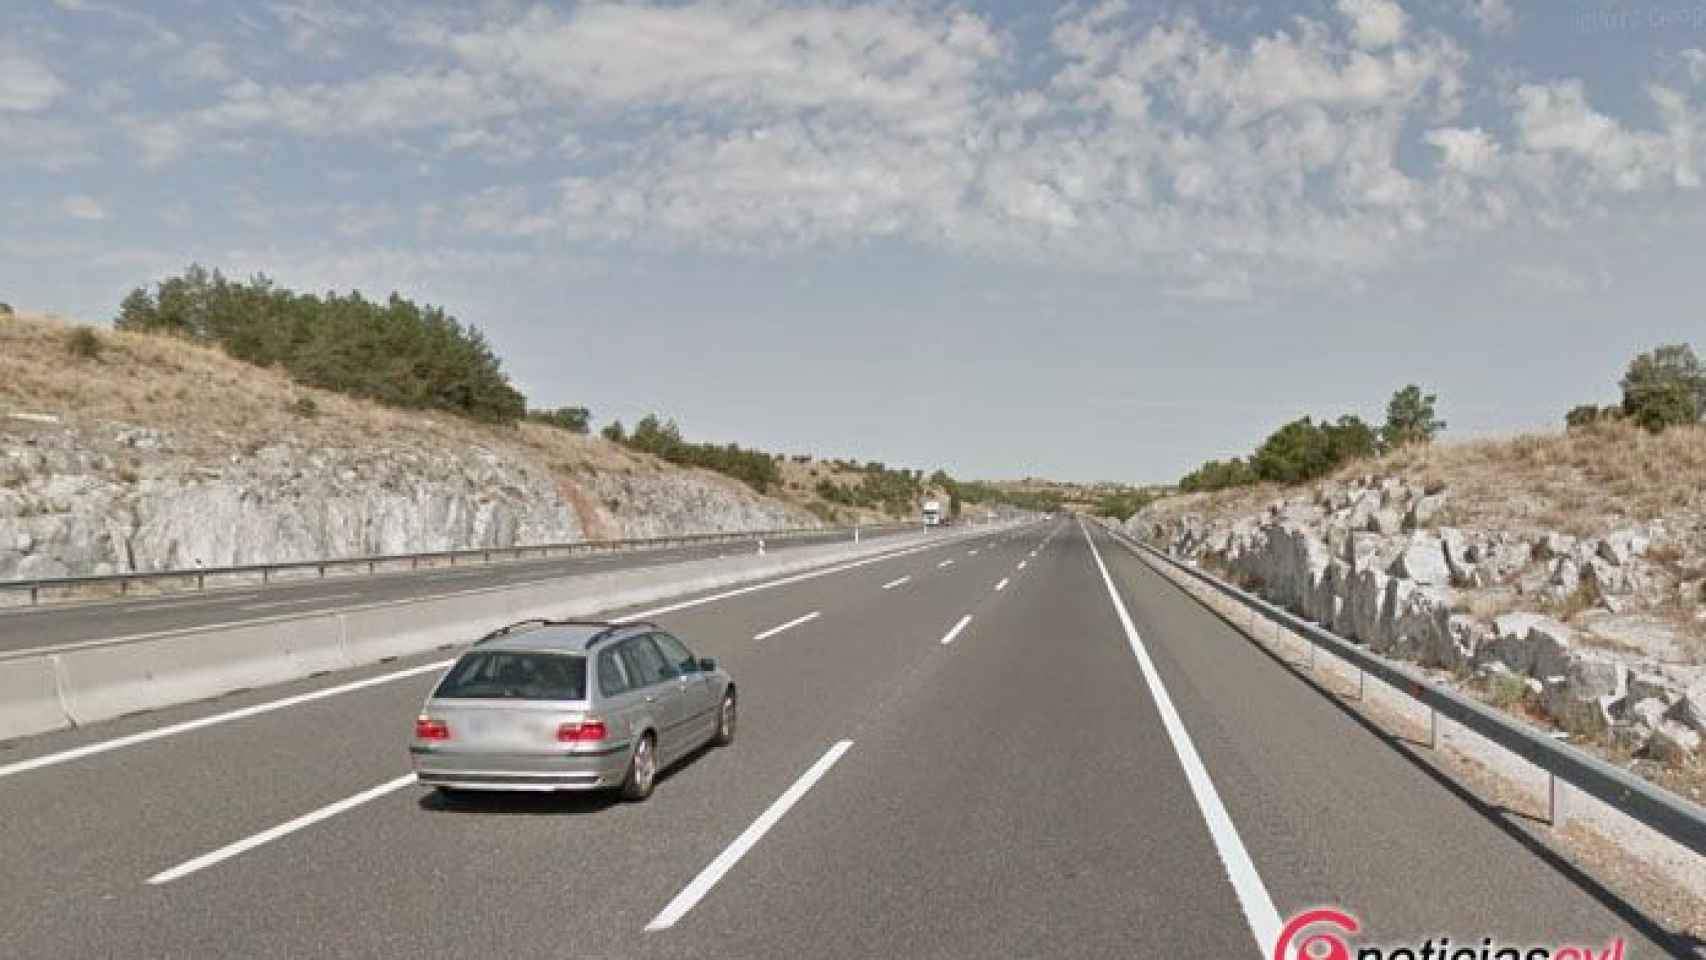 Segovia-sucesos-ap-6-accidente-camion-propano